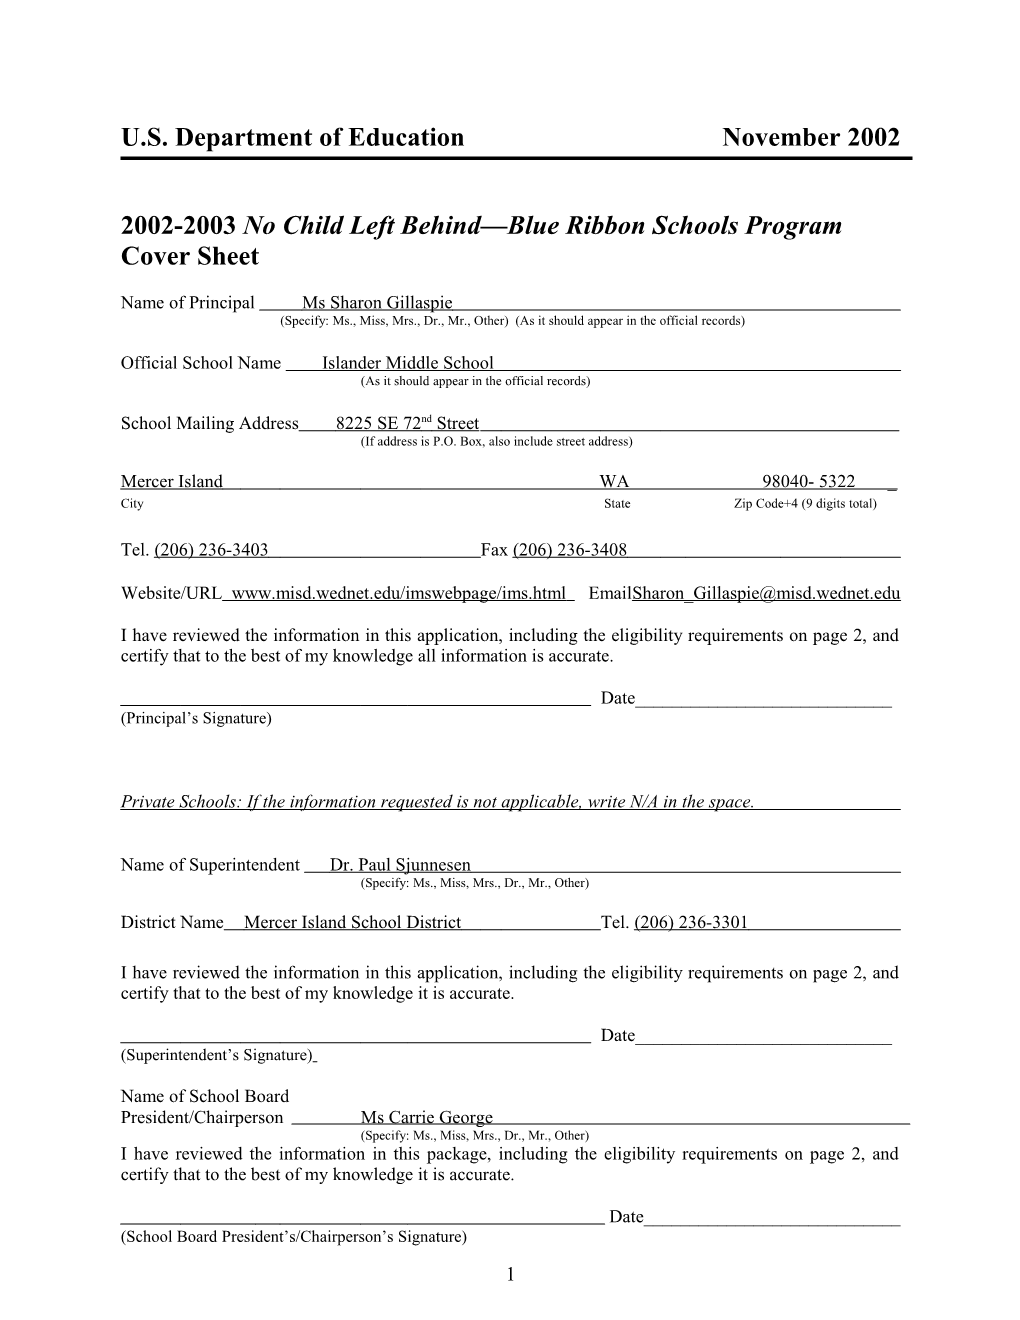 Islander Middle School 2003 No Child Left Behind-Blue Ribbon School (Msword)